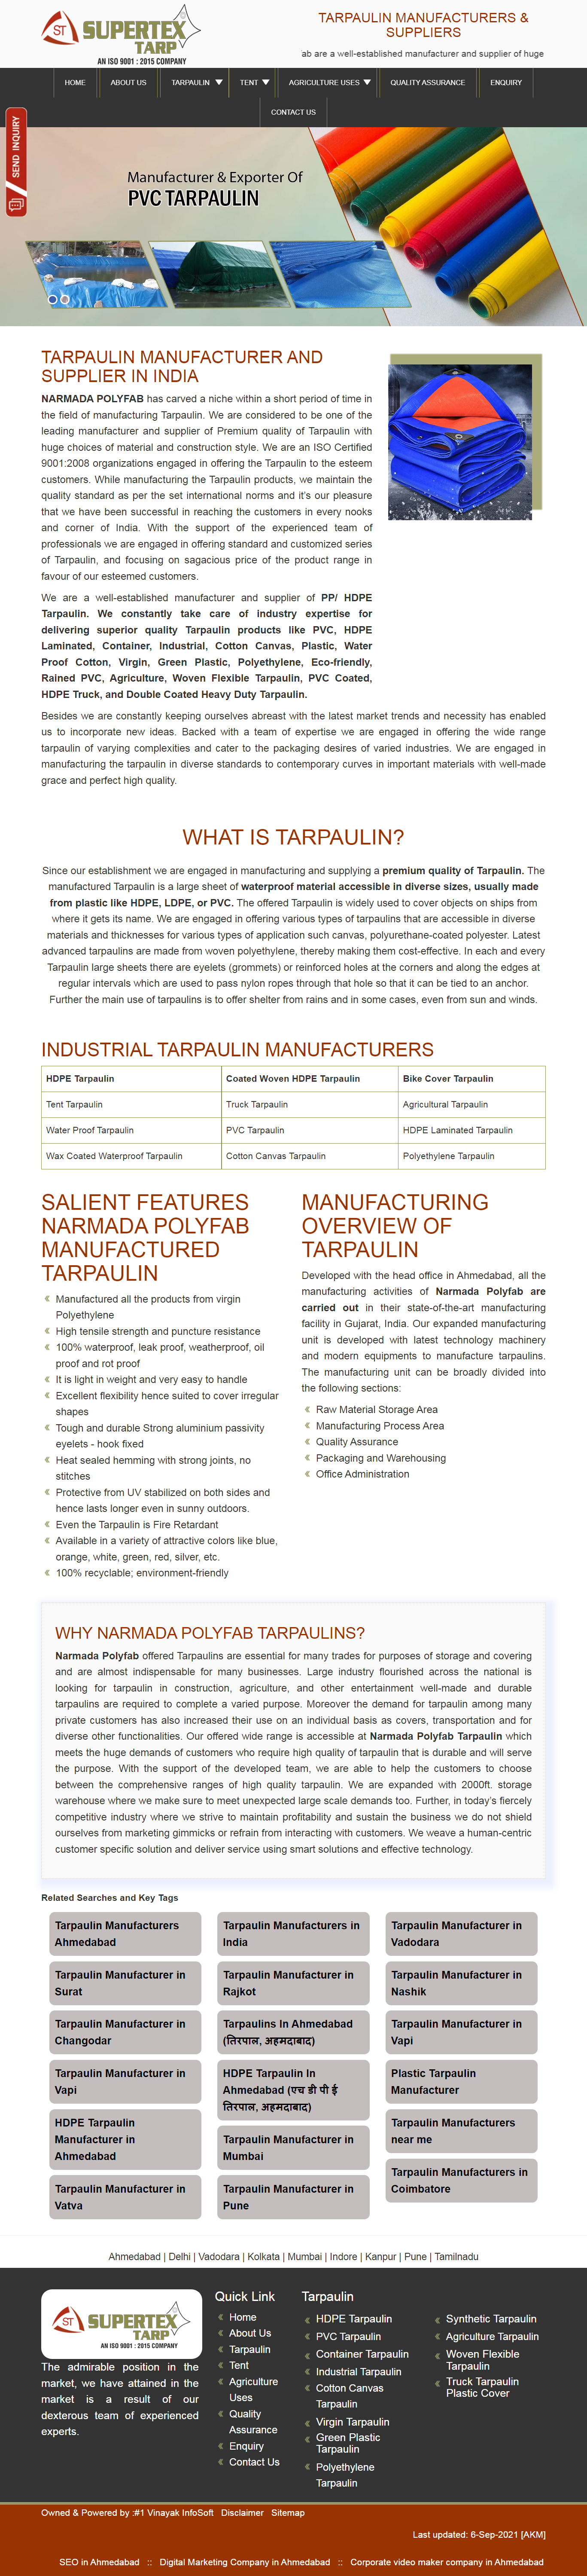 Tarpaulin Manufacturers